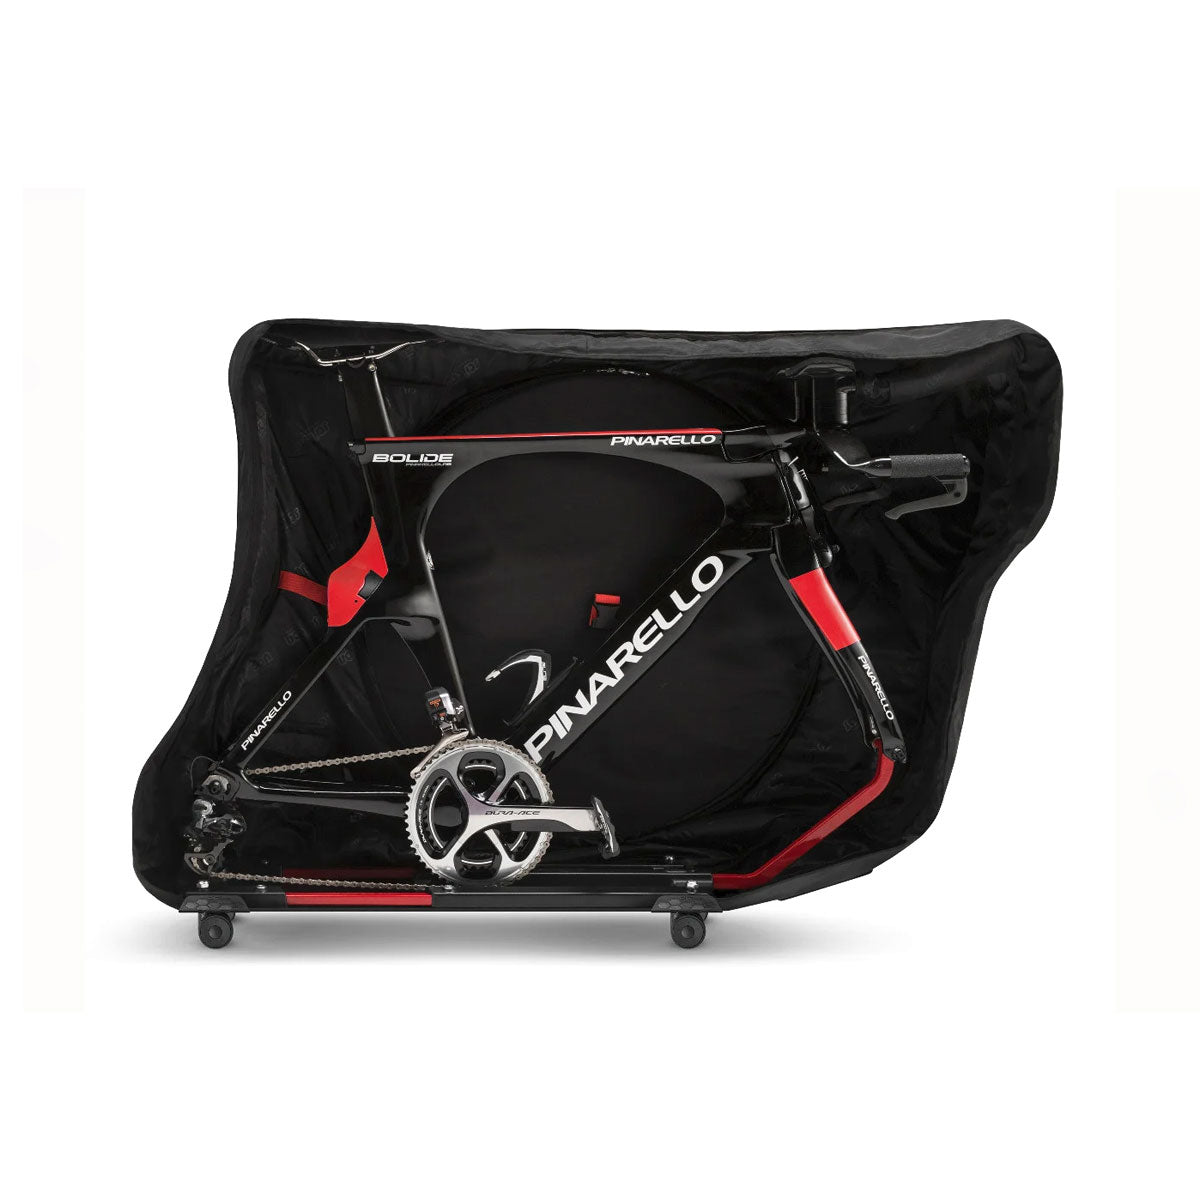 Aerocomfort 3.0 Triathlon Bike Travel Bag